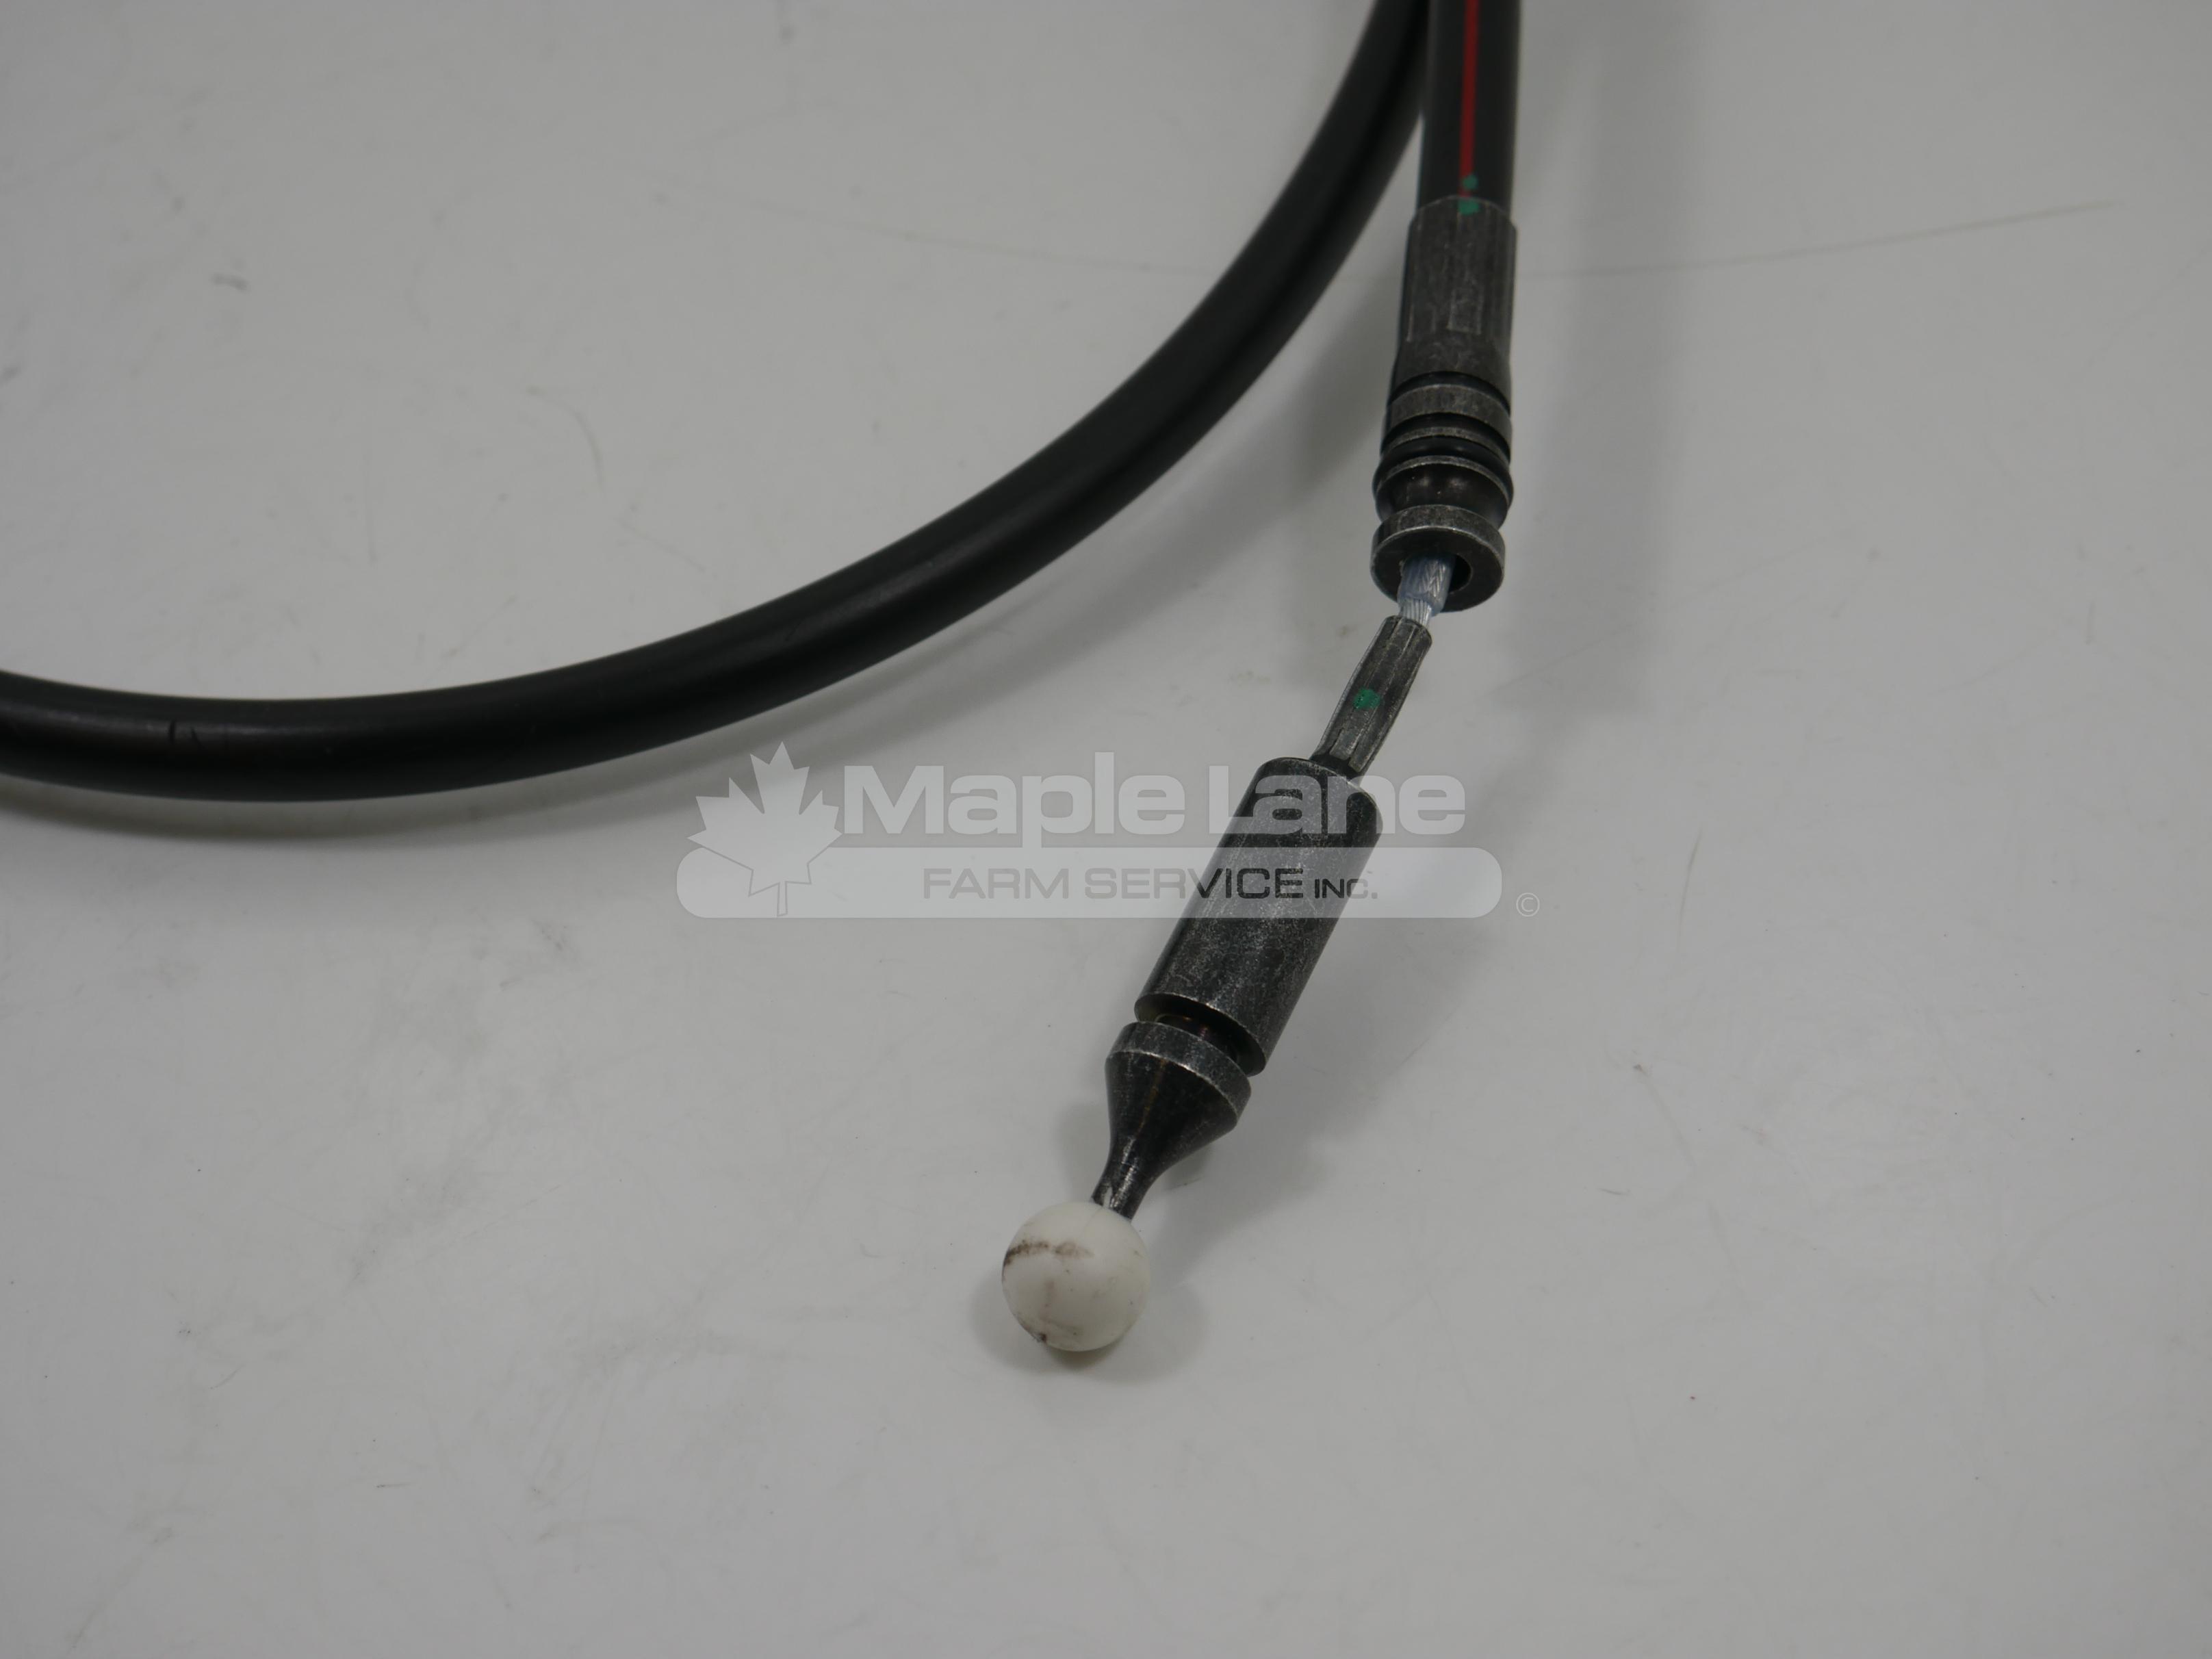 AL5020944 Loader Cable